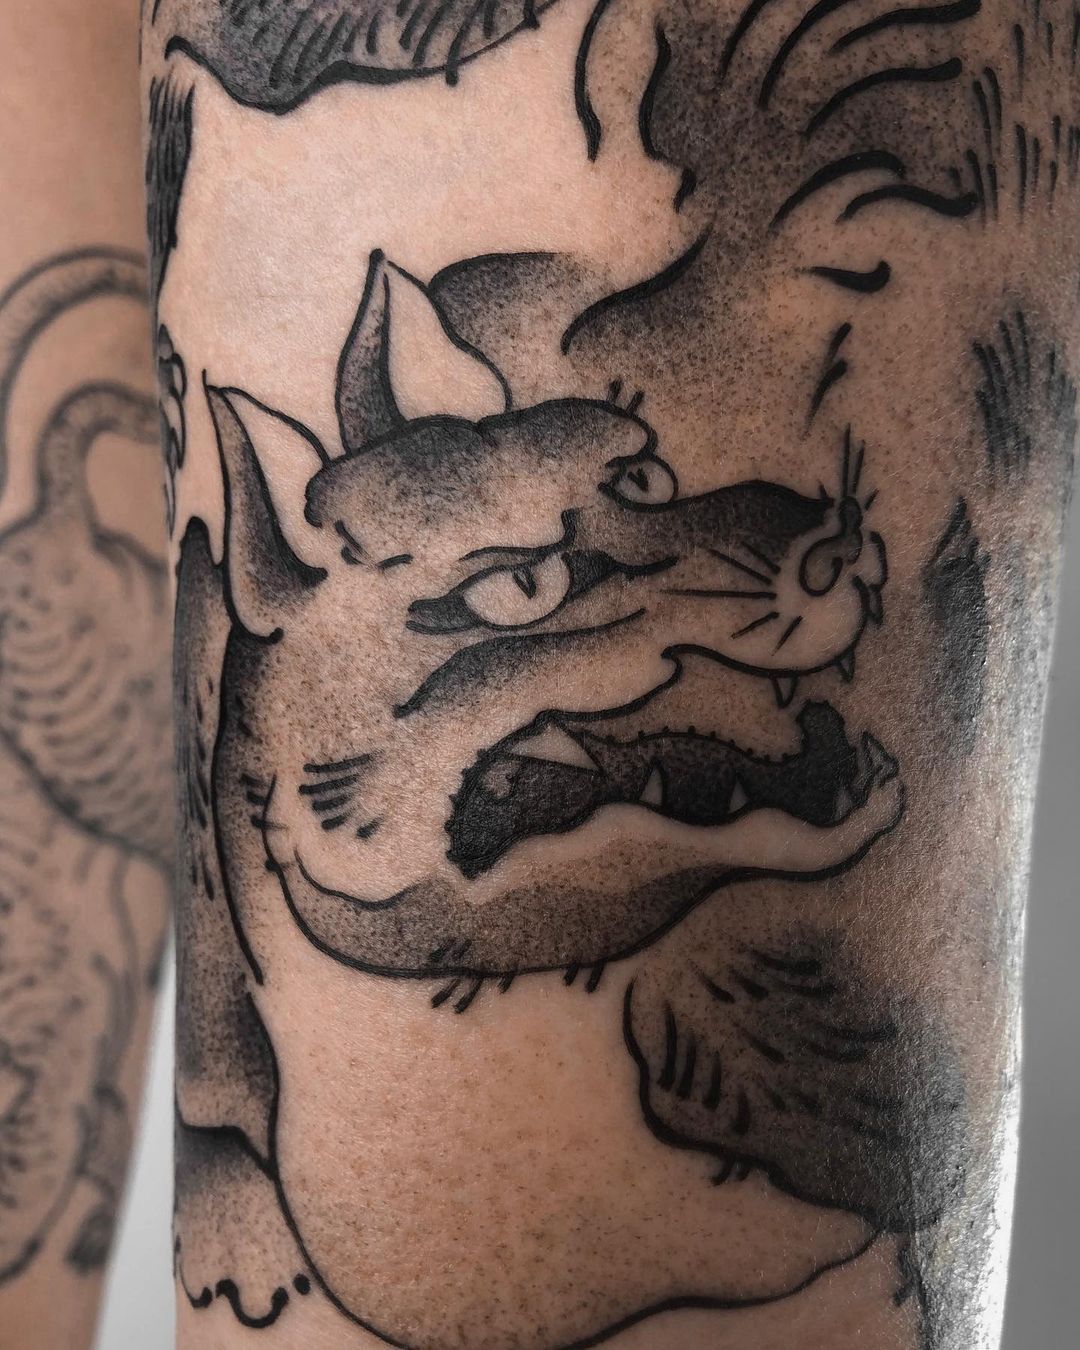 Tattoo design Princess of Wolves - sleeve by Xenija88 on DeviantArt